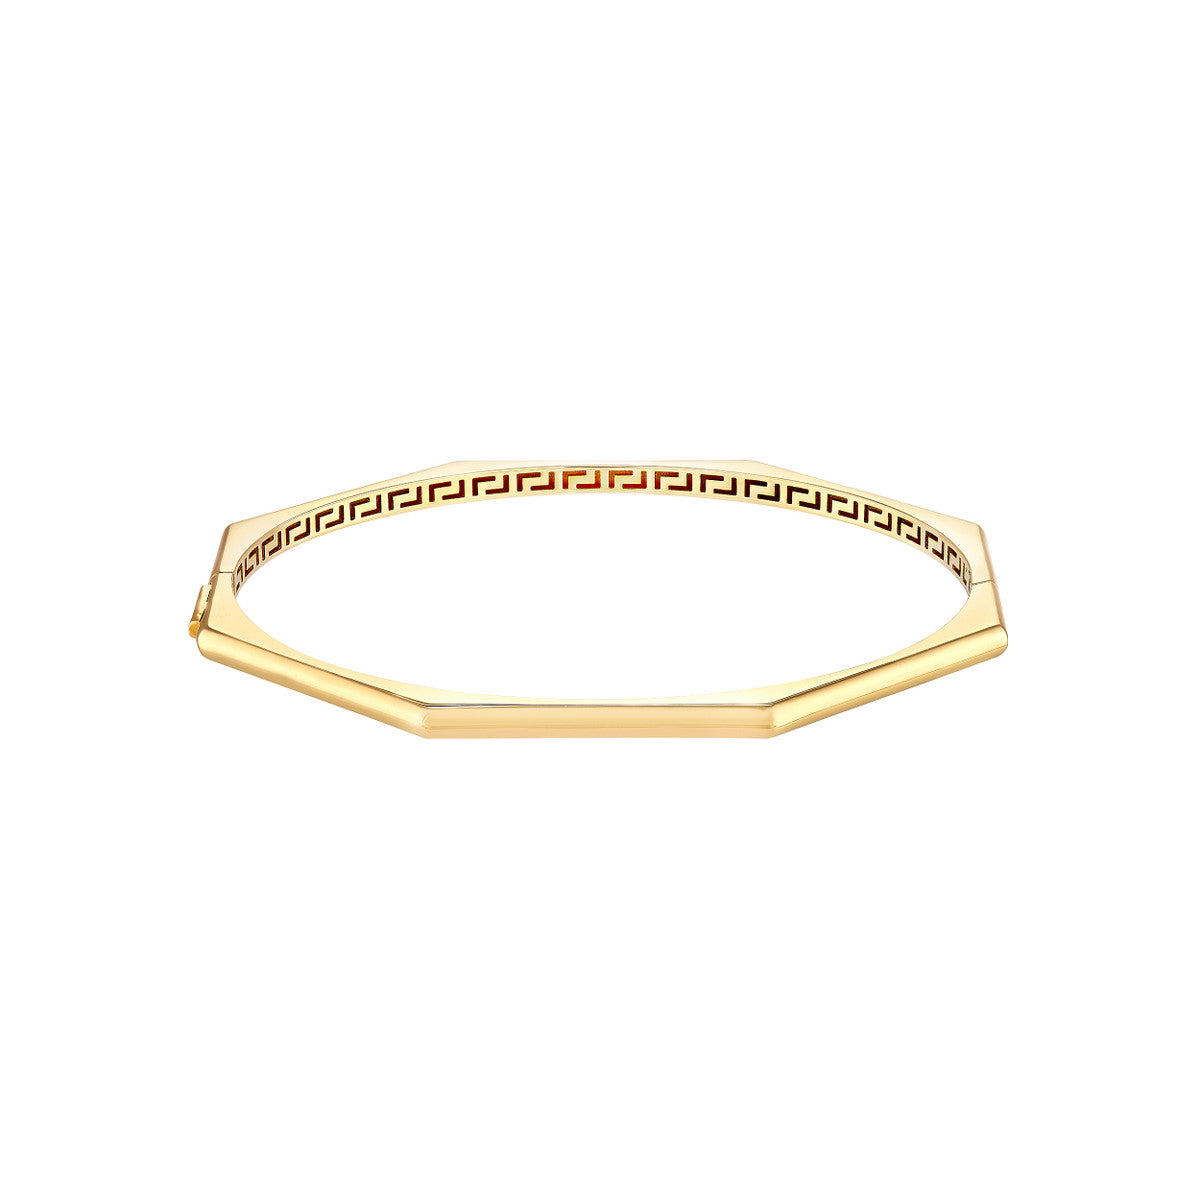 a gold bracelet with a greek key design